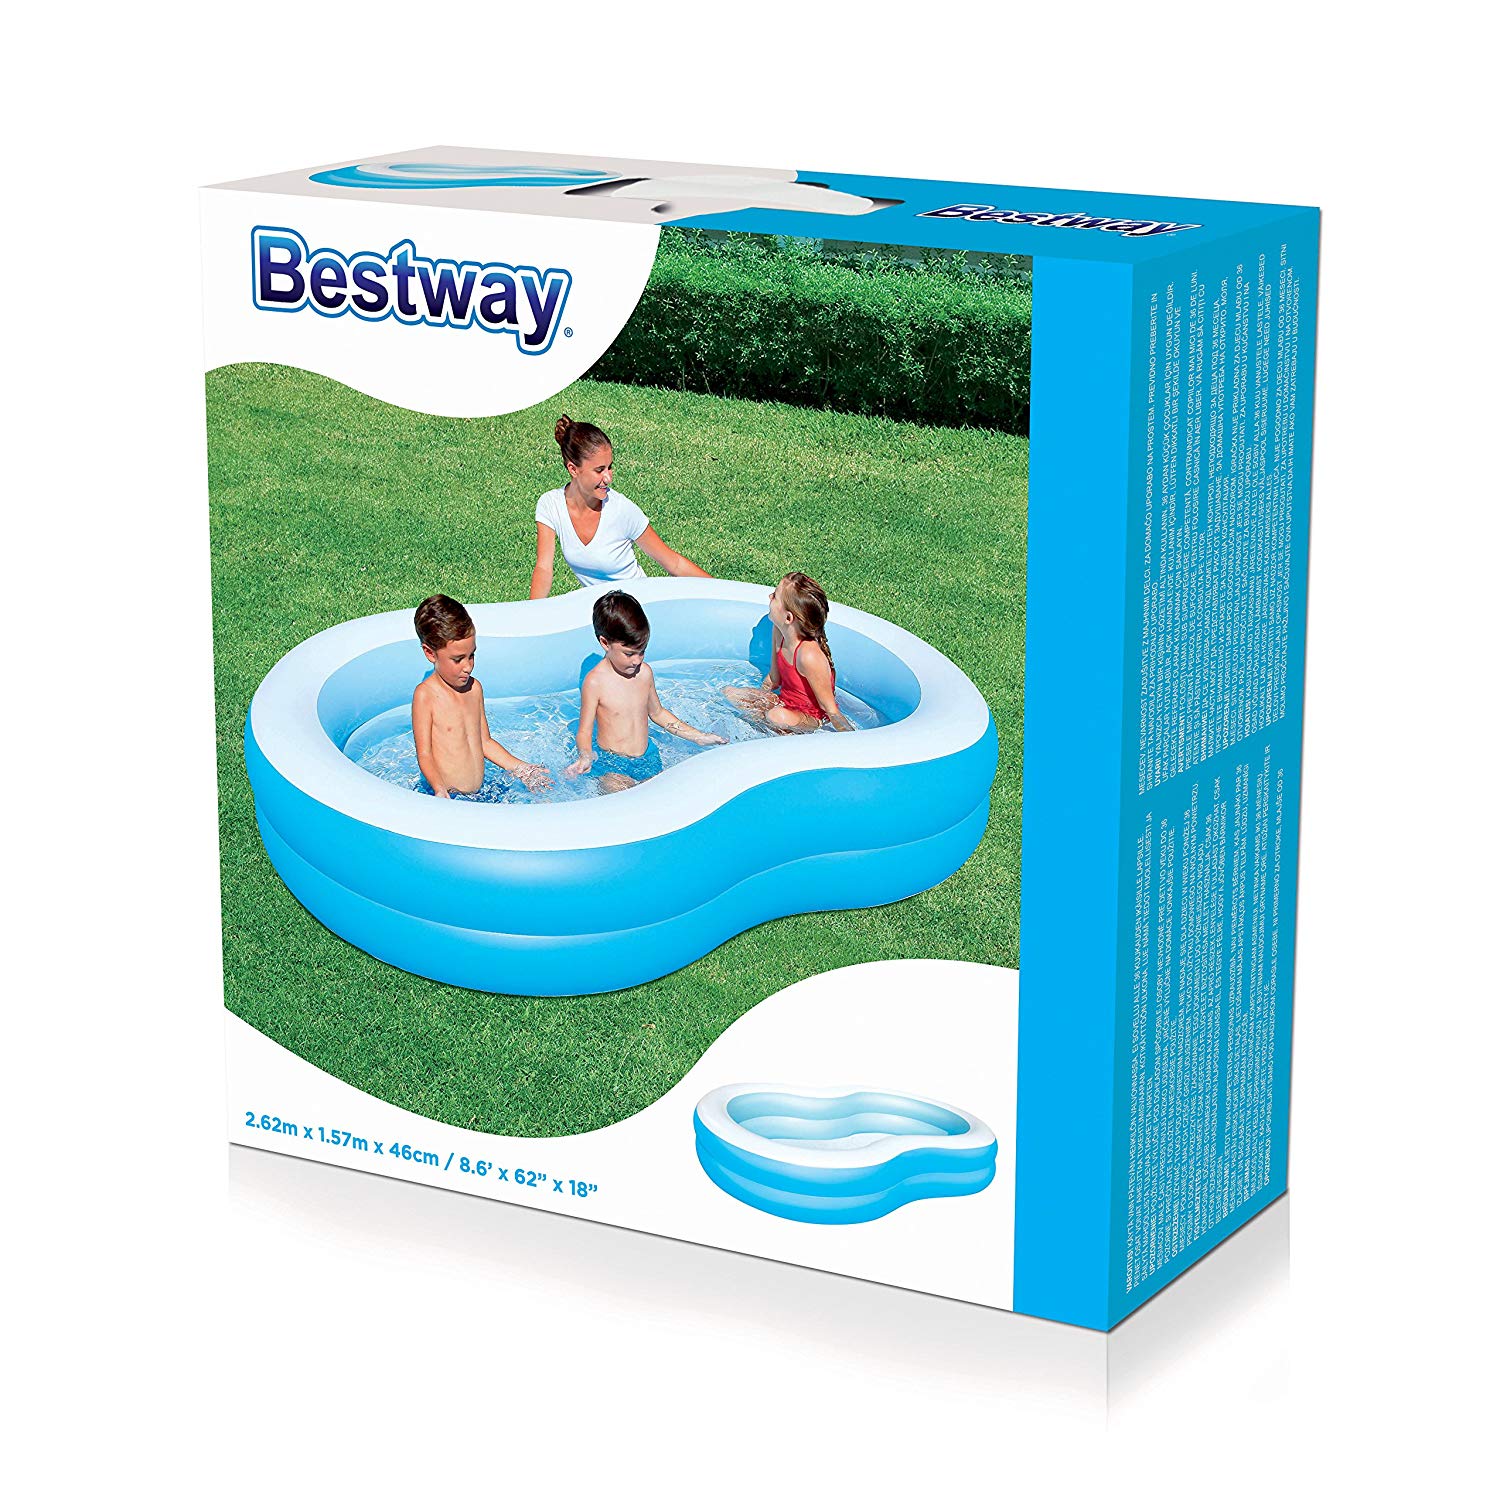 Bestway - The Big Lagoon Family Pool (8.6' x 62" x 18"/2.62m x 1.57m x 46cm)